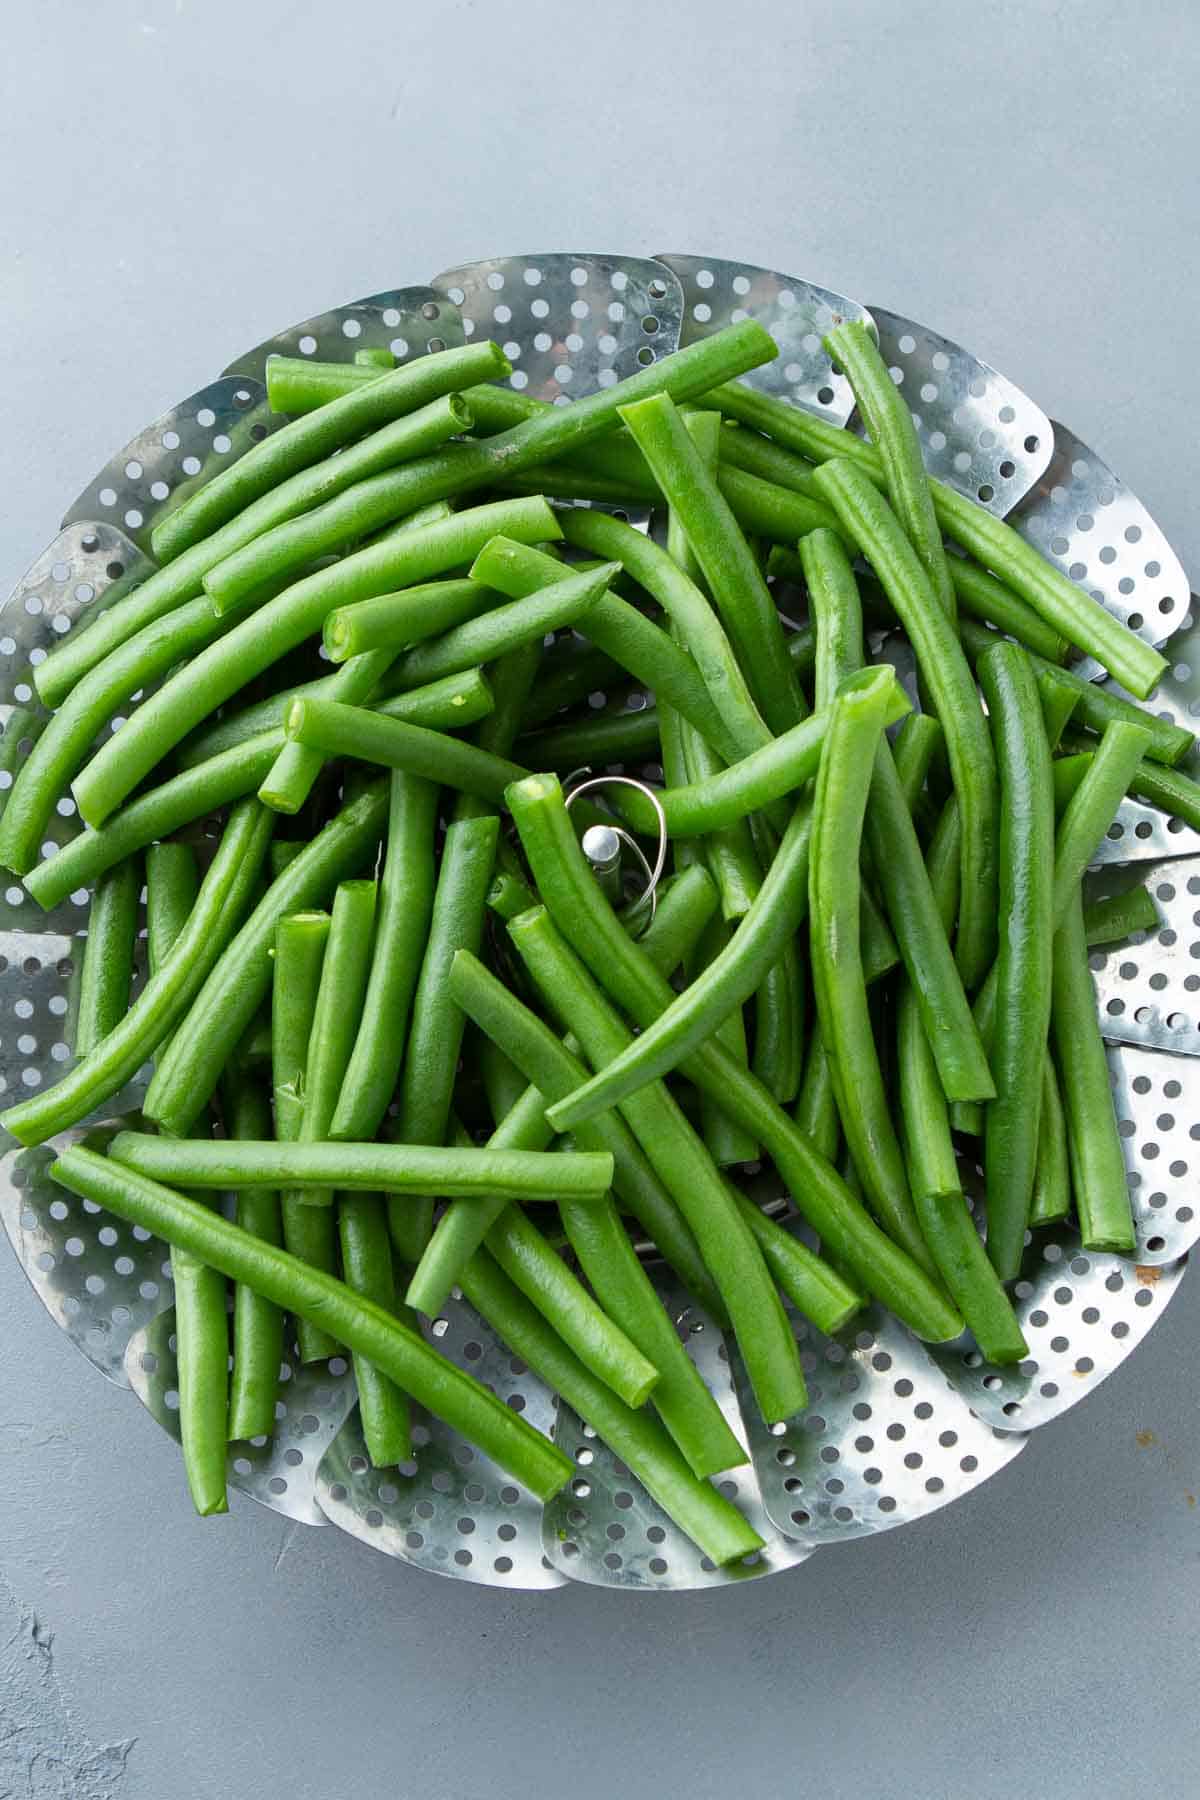 Green beans in a steamer basket.